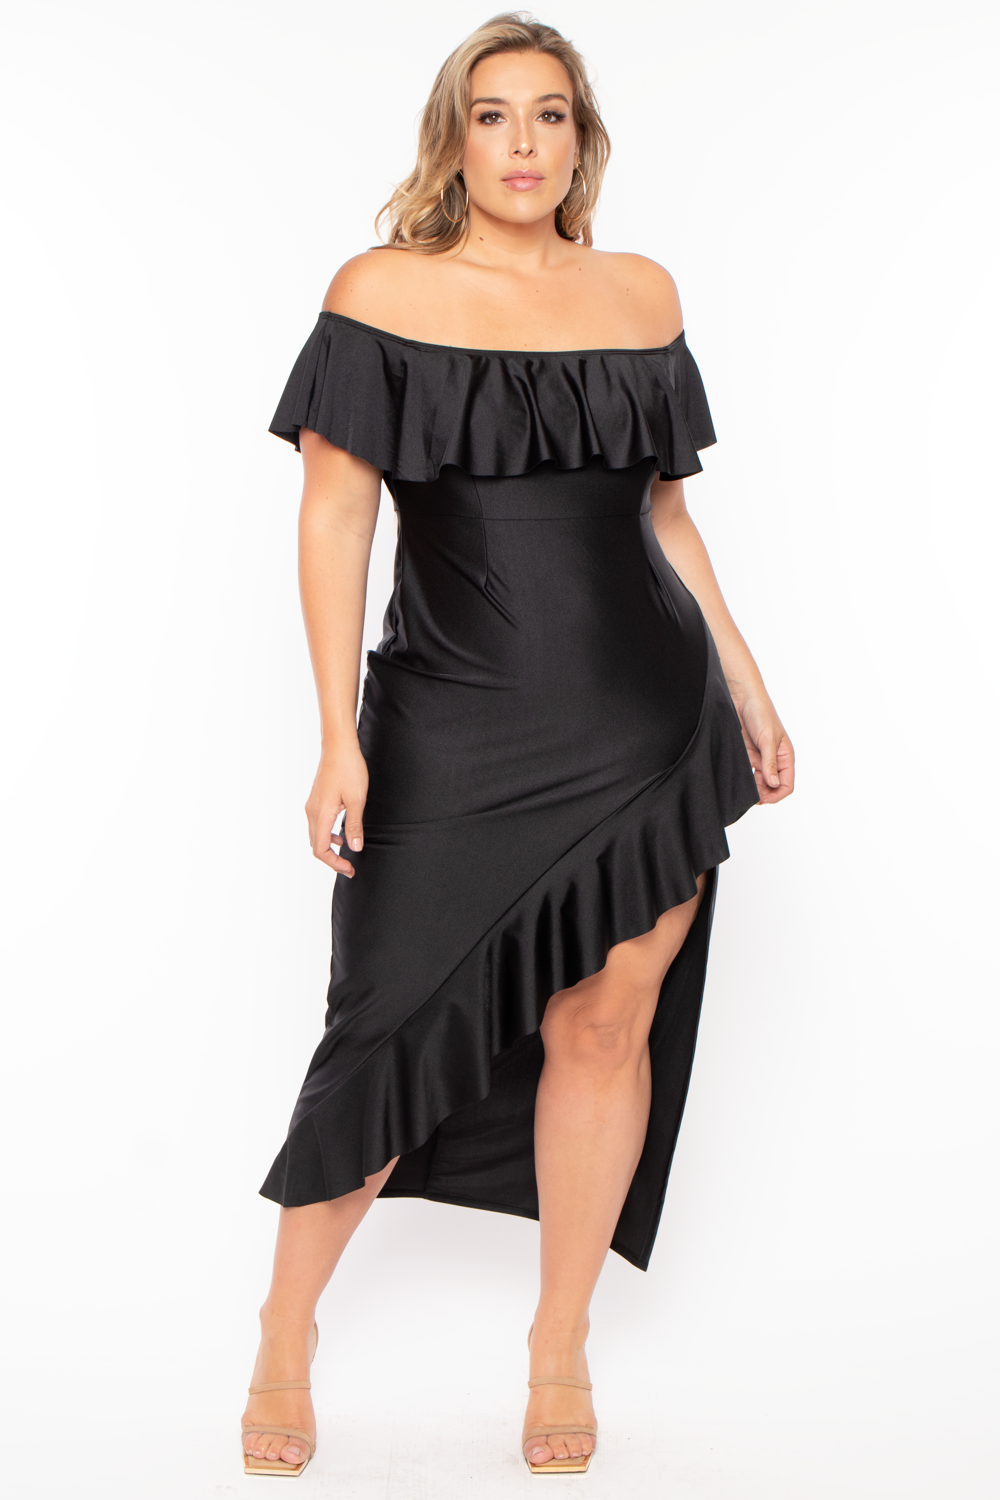 Plus Size Samba Frill Bodycon Dress - Black - Curvy Sense